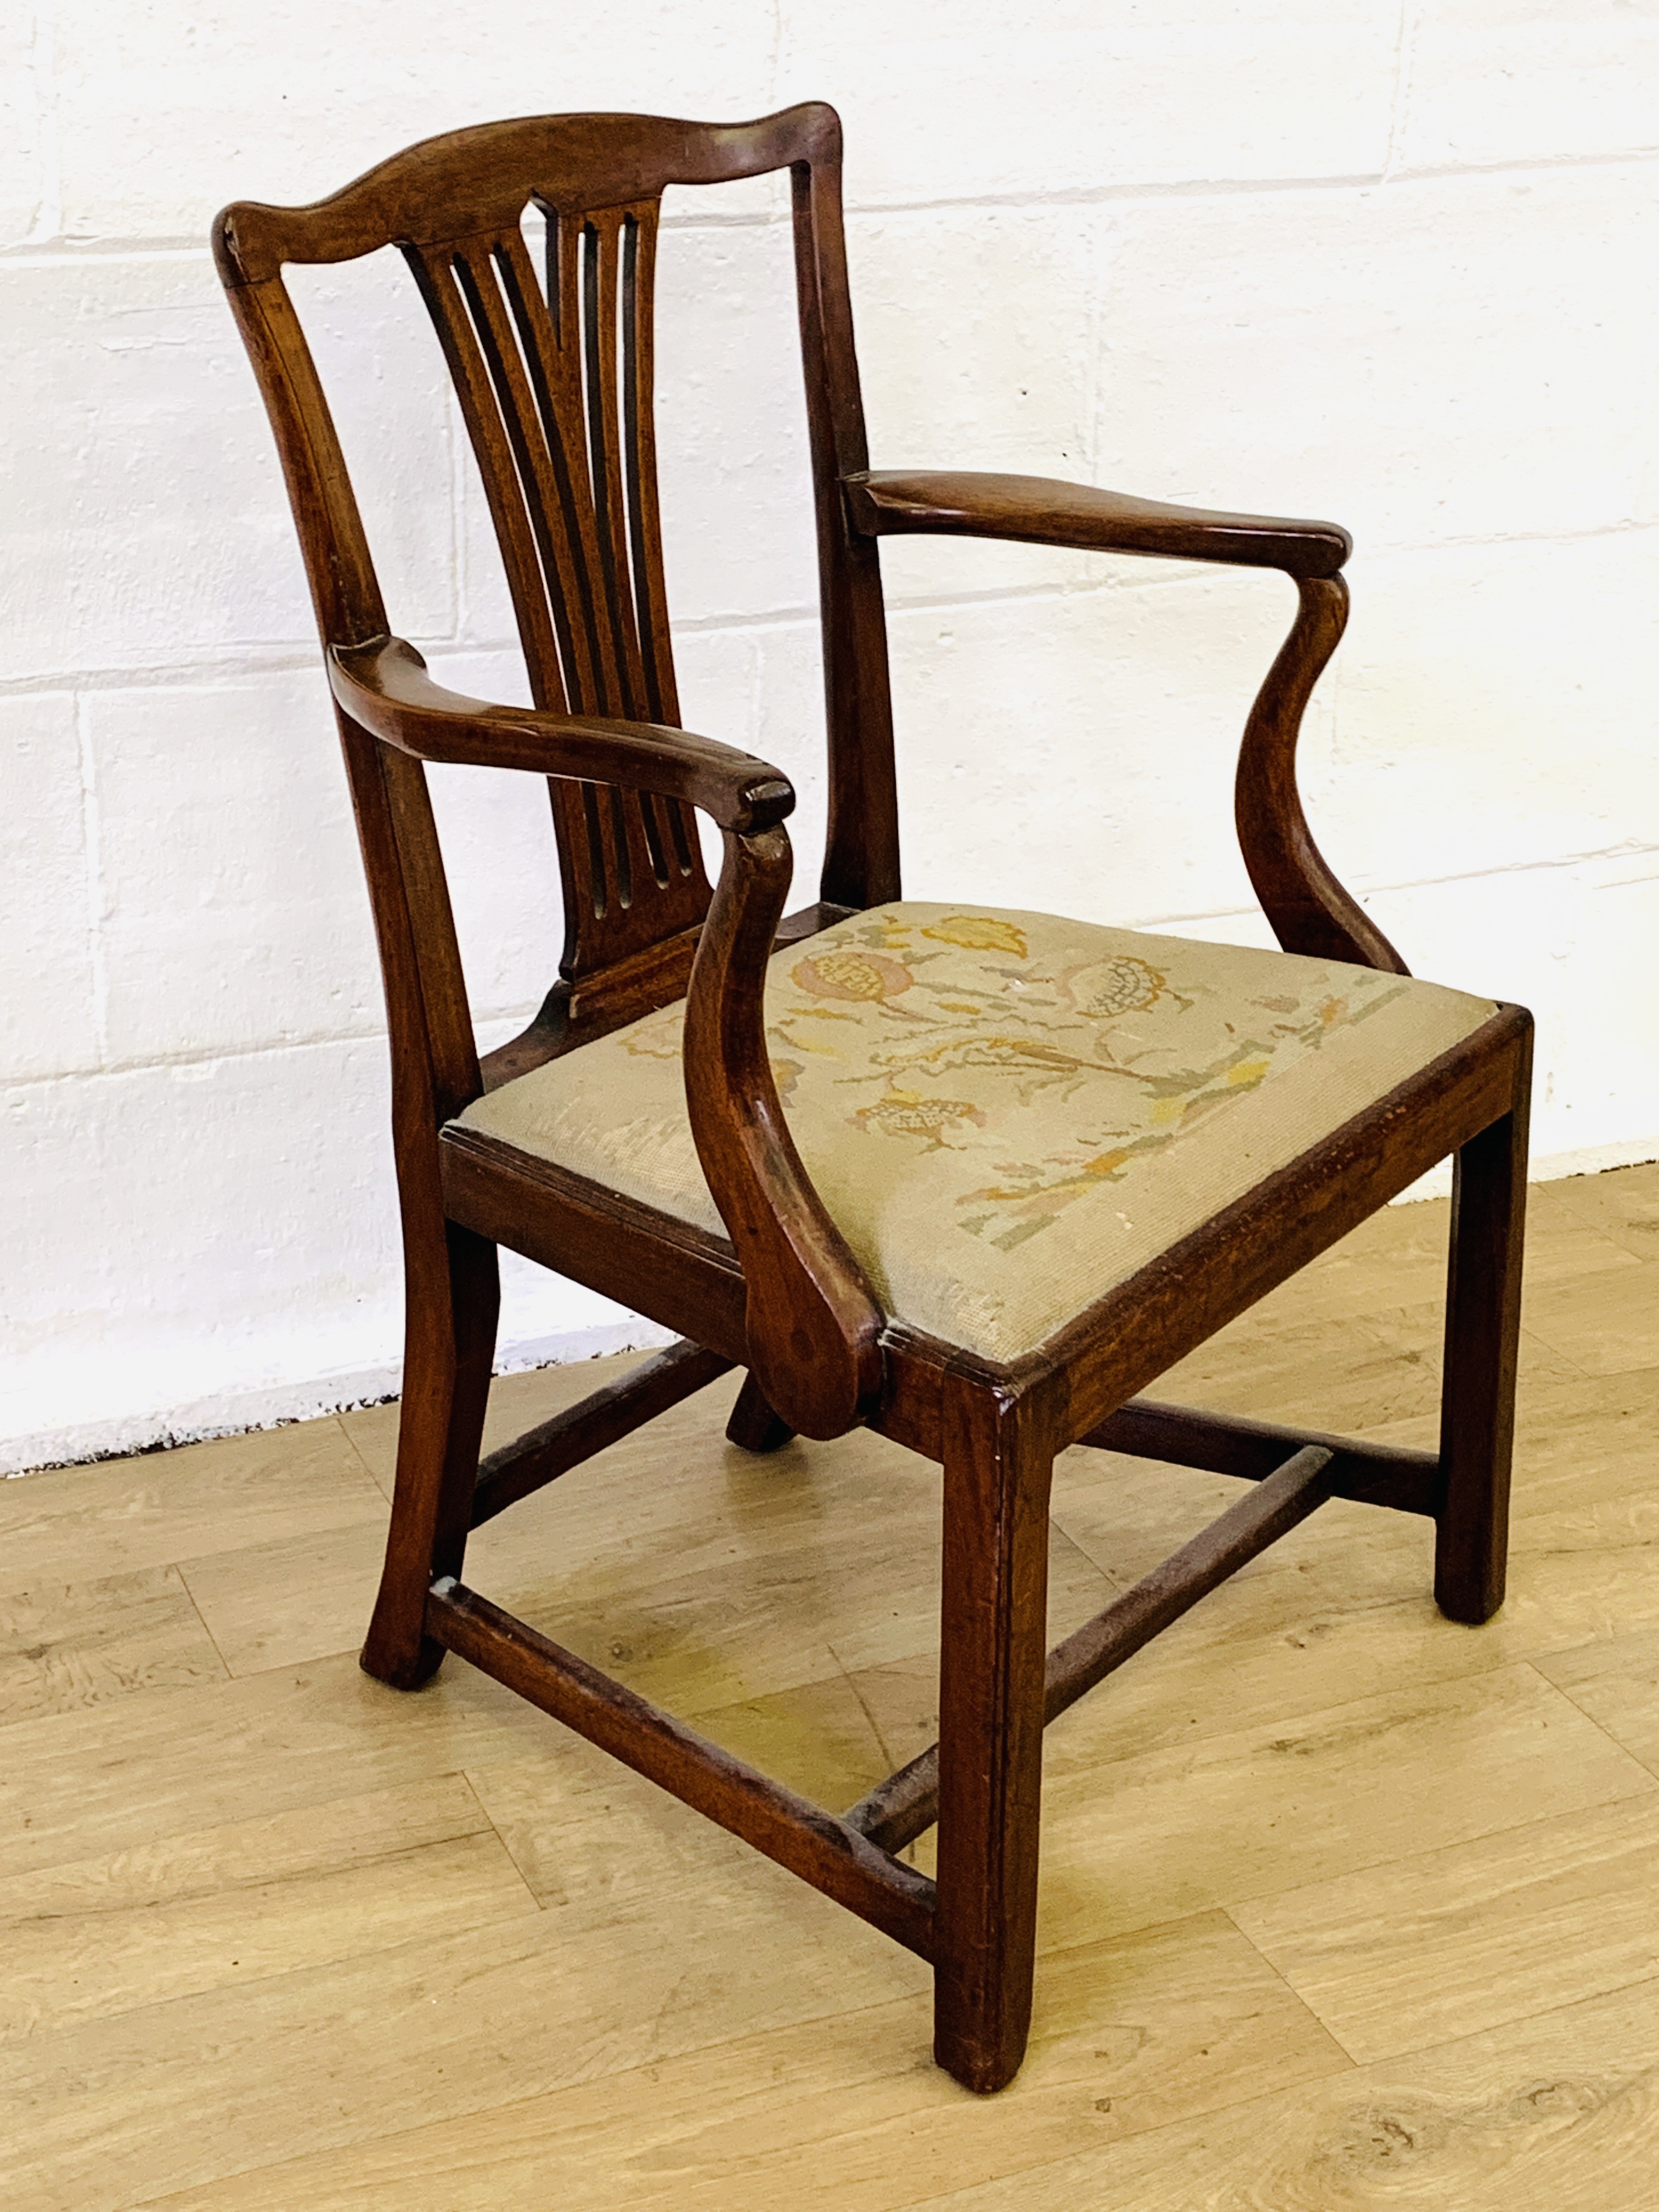 Mahogany elbow chair - Image 2 of 4